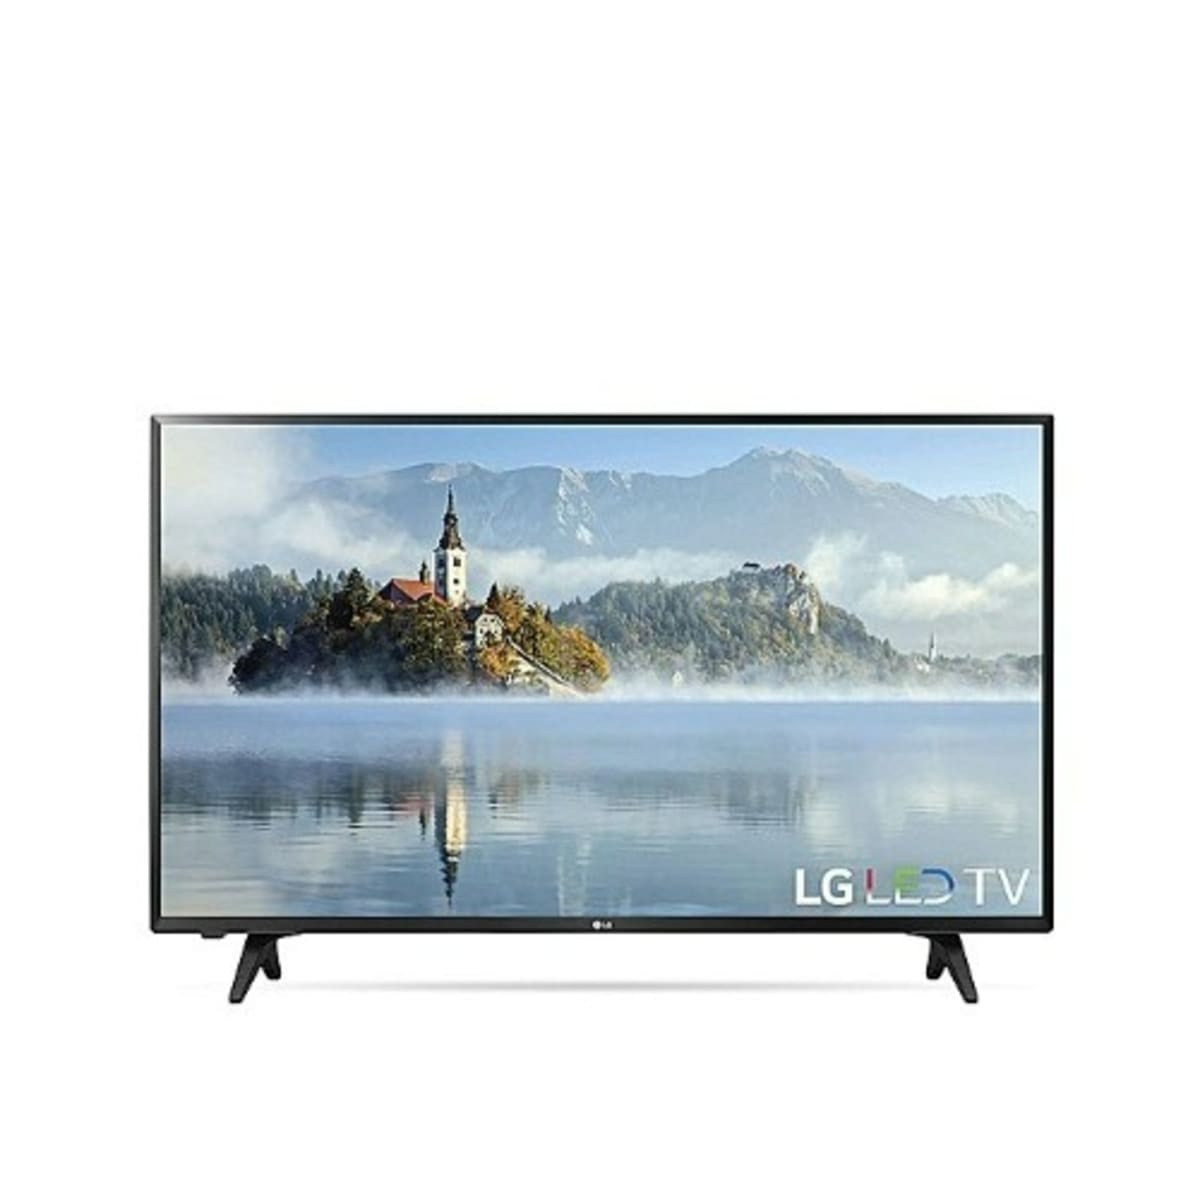 Acumulativo Debe descuento LG 26'' Led TV | Konga Online Shopping